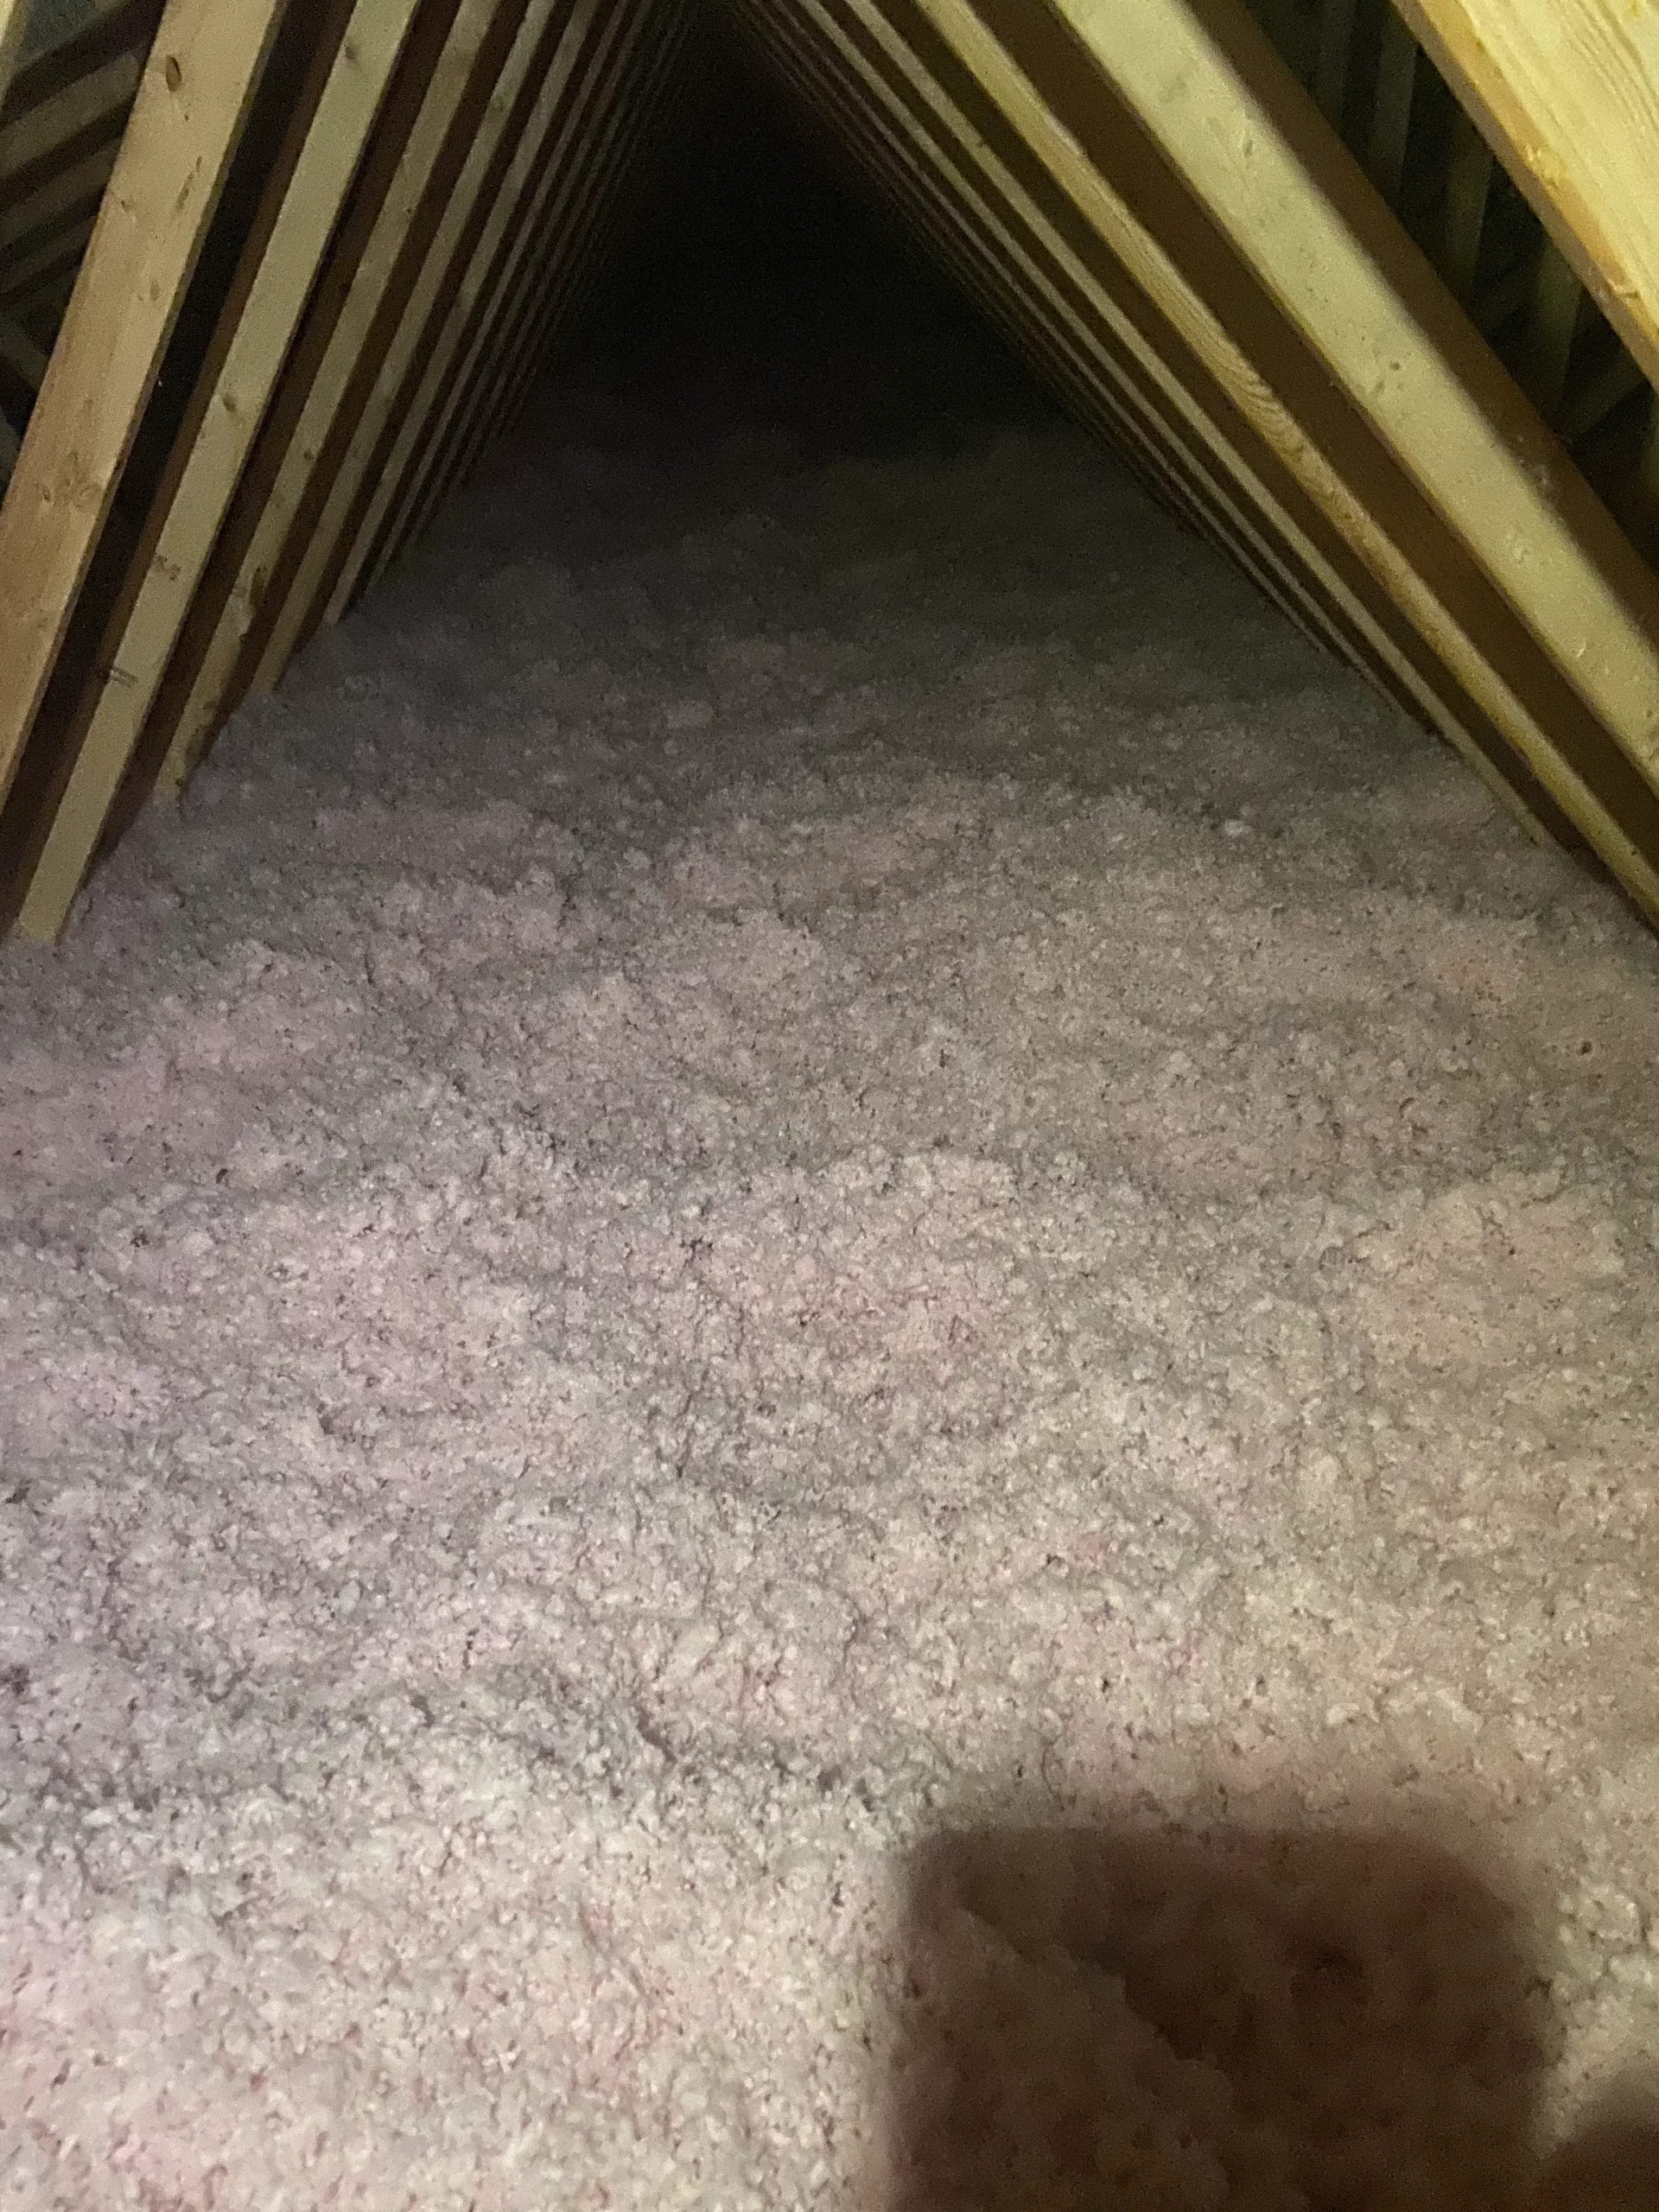 attic insulation services